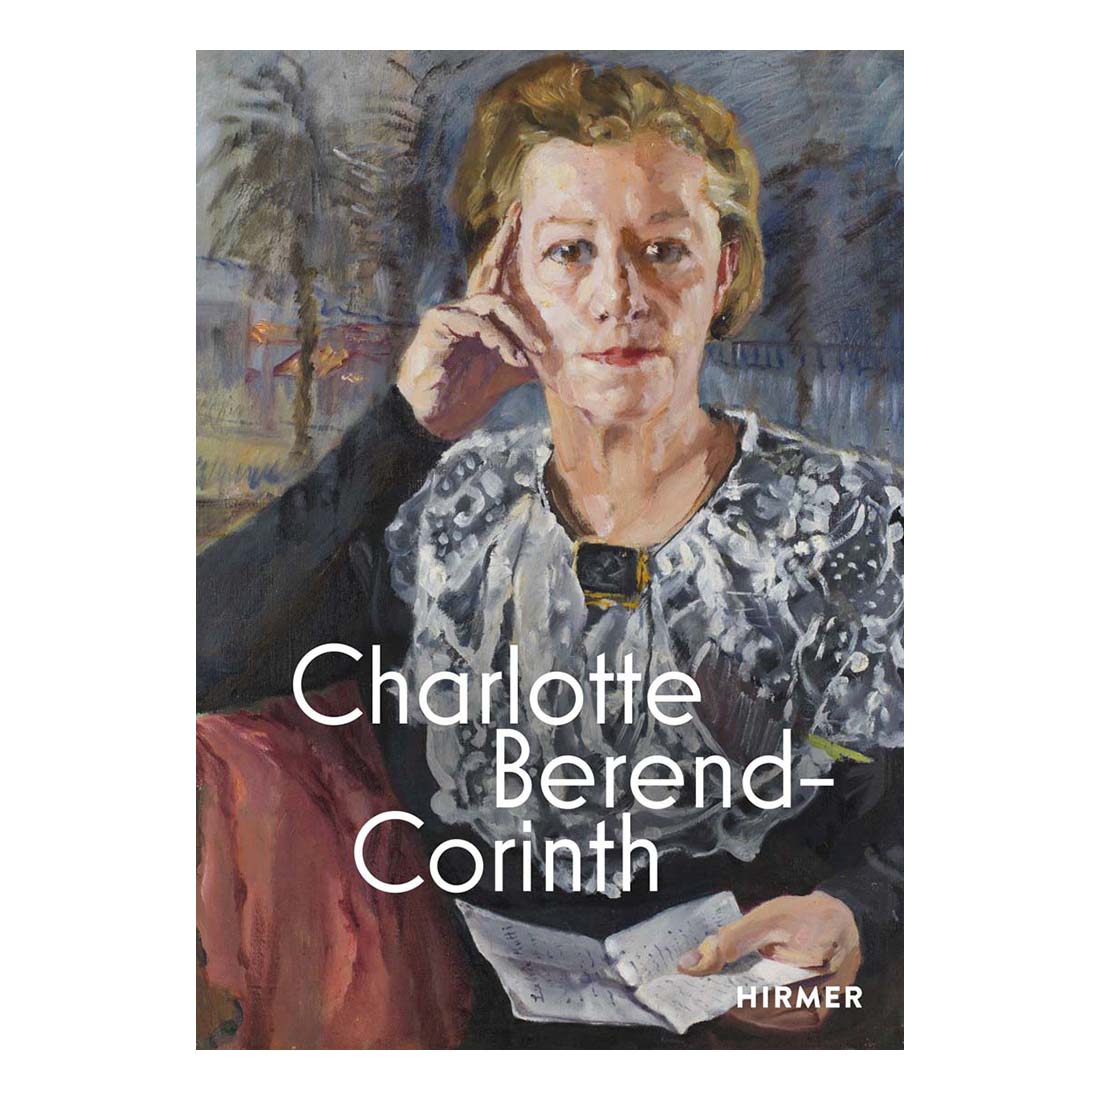 Charlotte Berend-Corinth